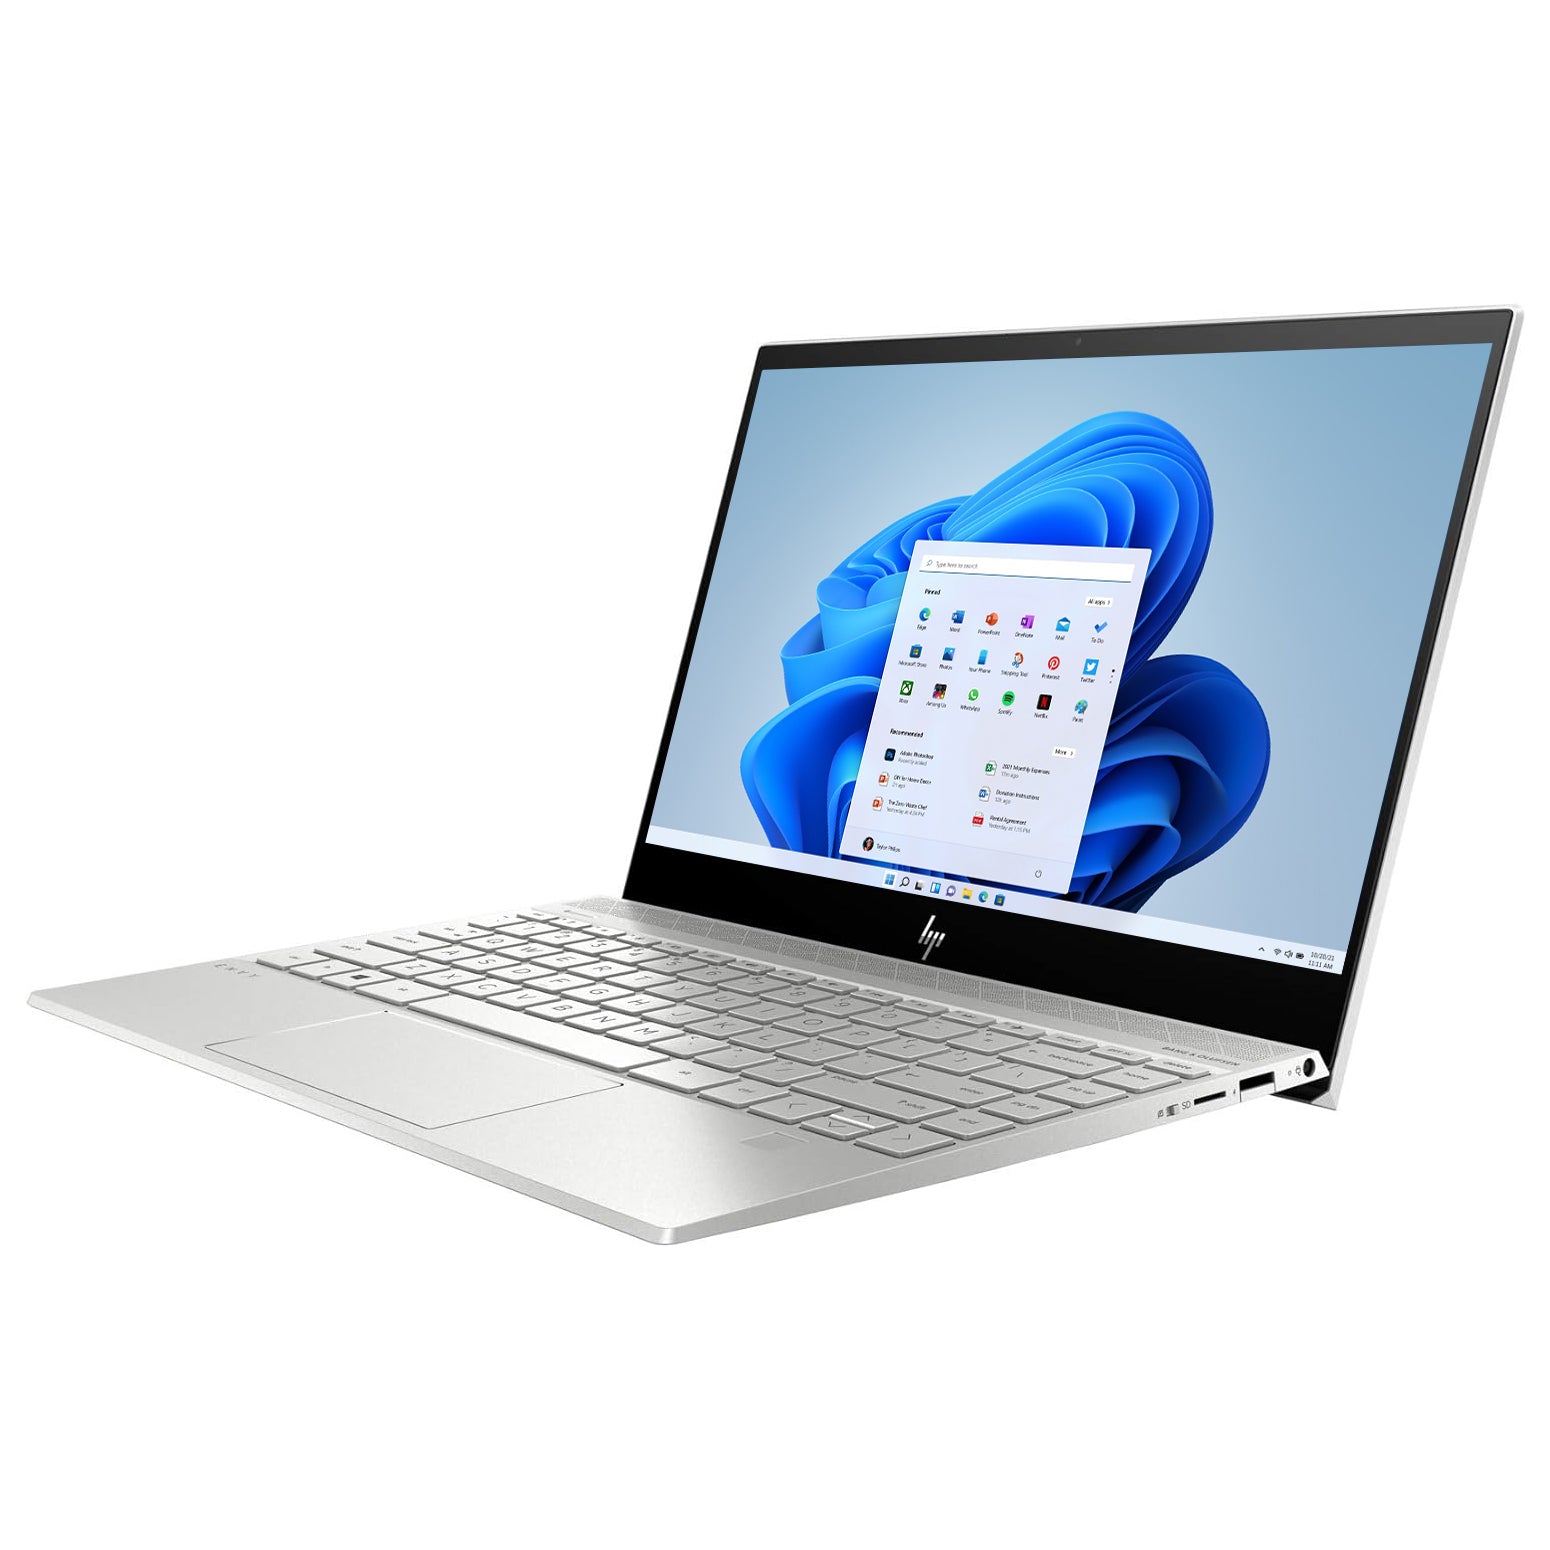 HP envy laptop 13-aq i5 1035G1 8gb/256gbノートPC | www.pizzatime.lt